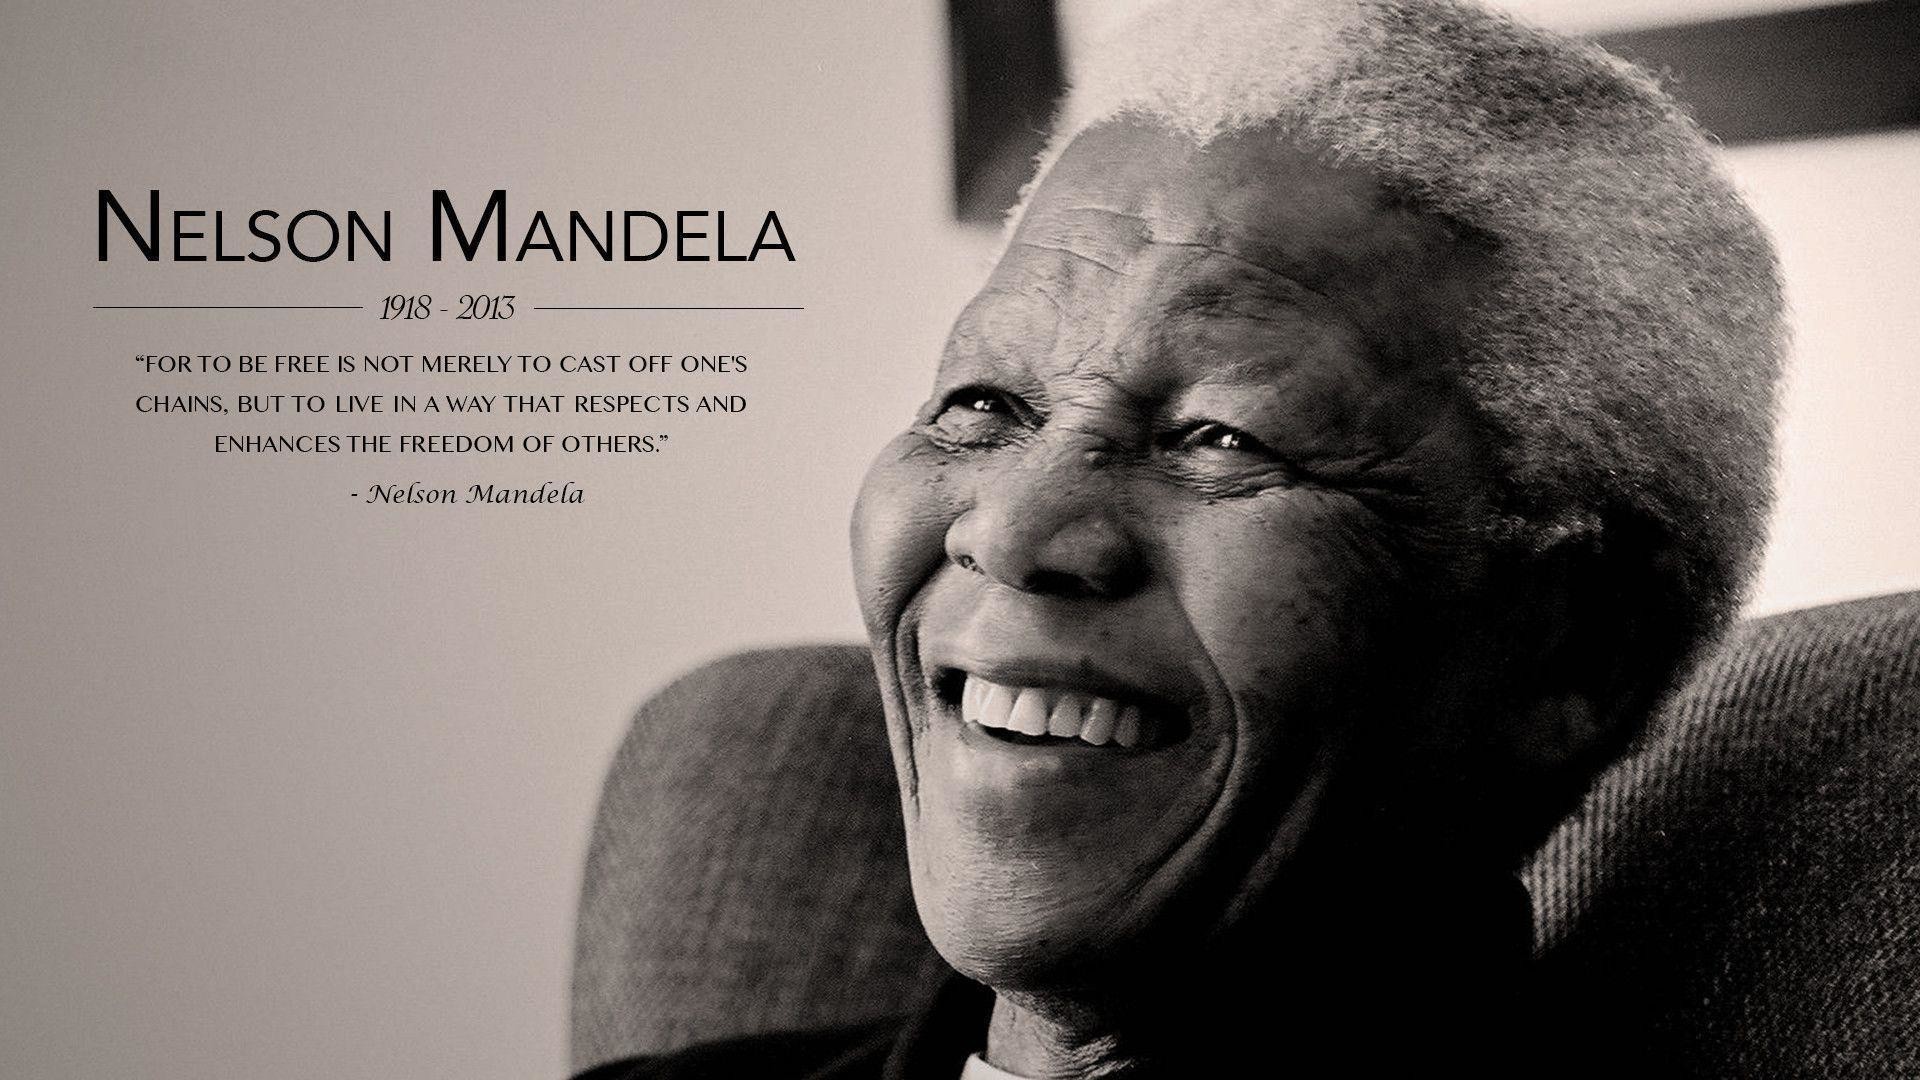 1920x1080 iReever Mandela Tribute - Nelson Mandela Wallpaper (36266503) - Fanpop